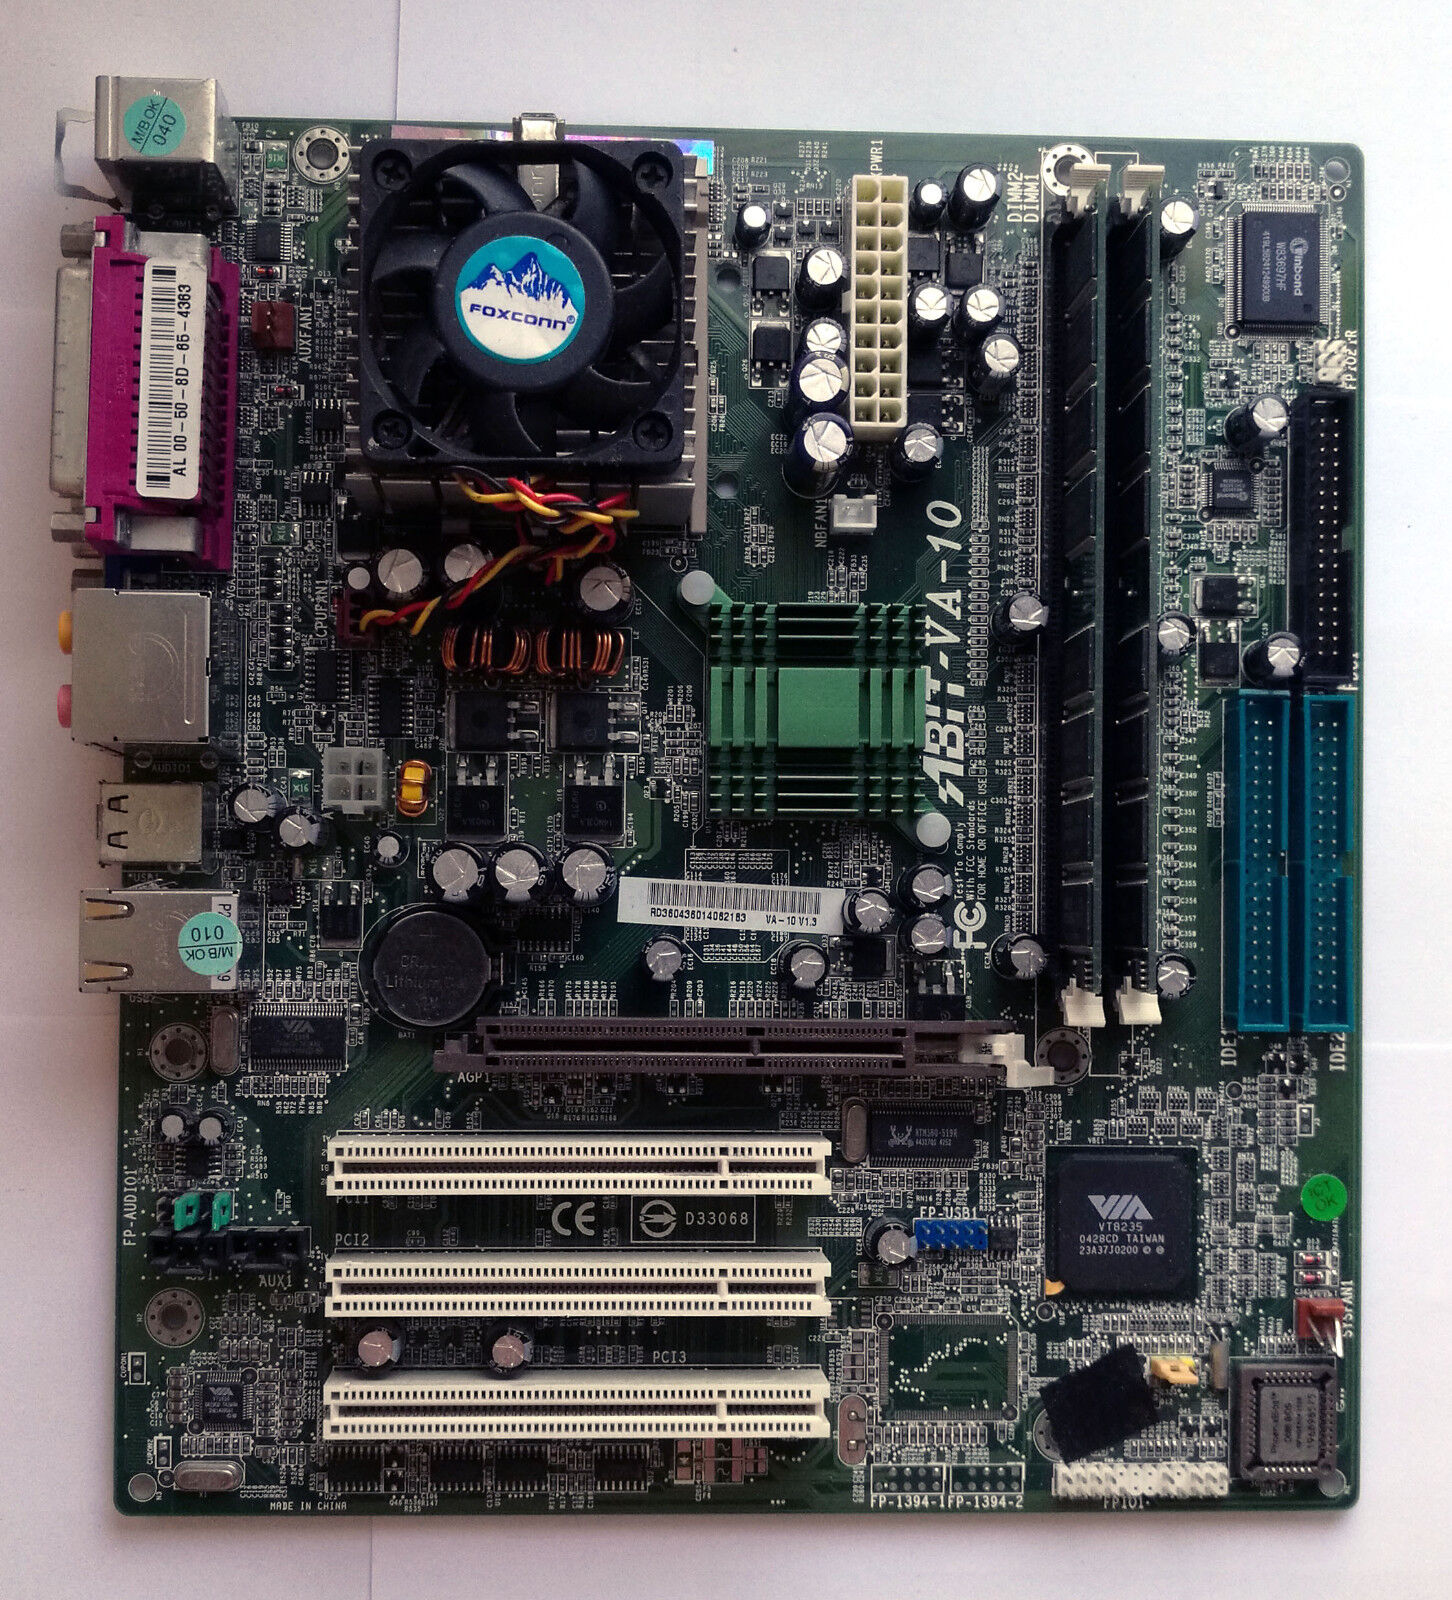 Abit VA-10 Motherboard with AMD Sempron 2400+ CPU and 1GB RAM - Test OK